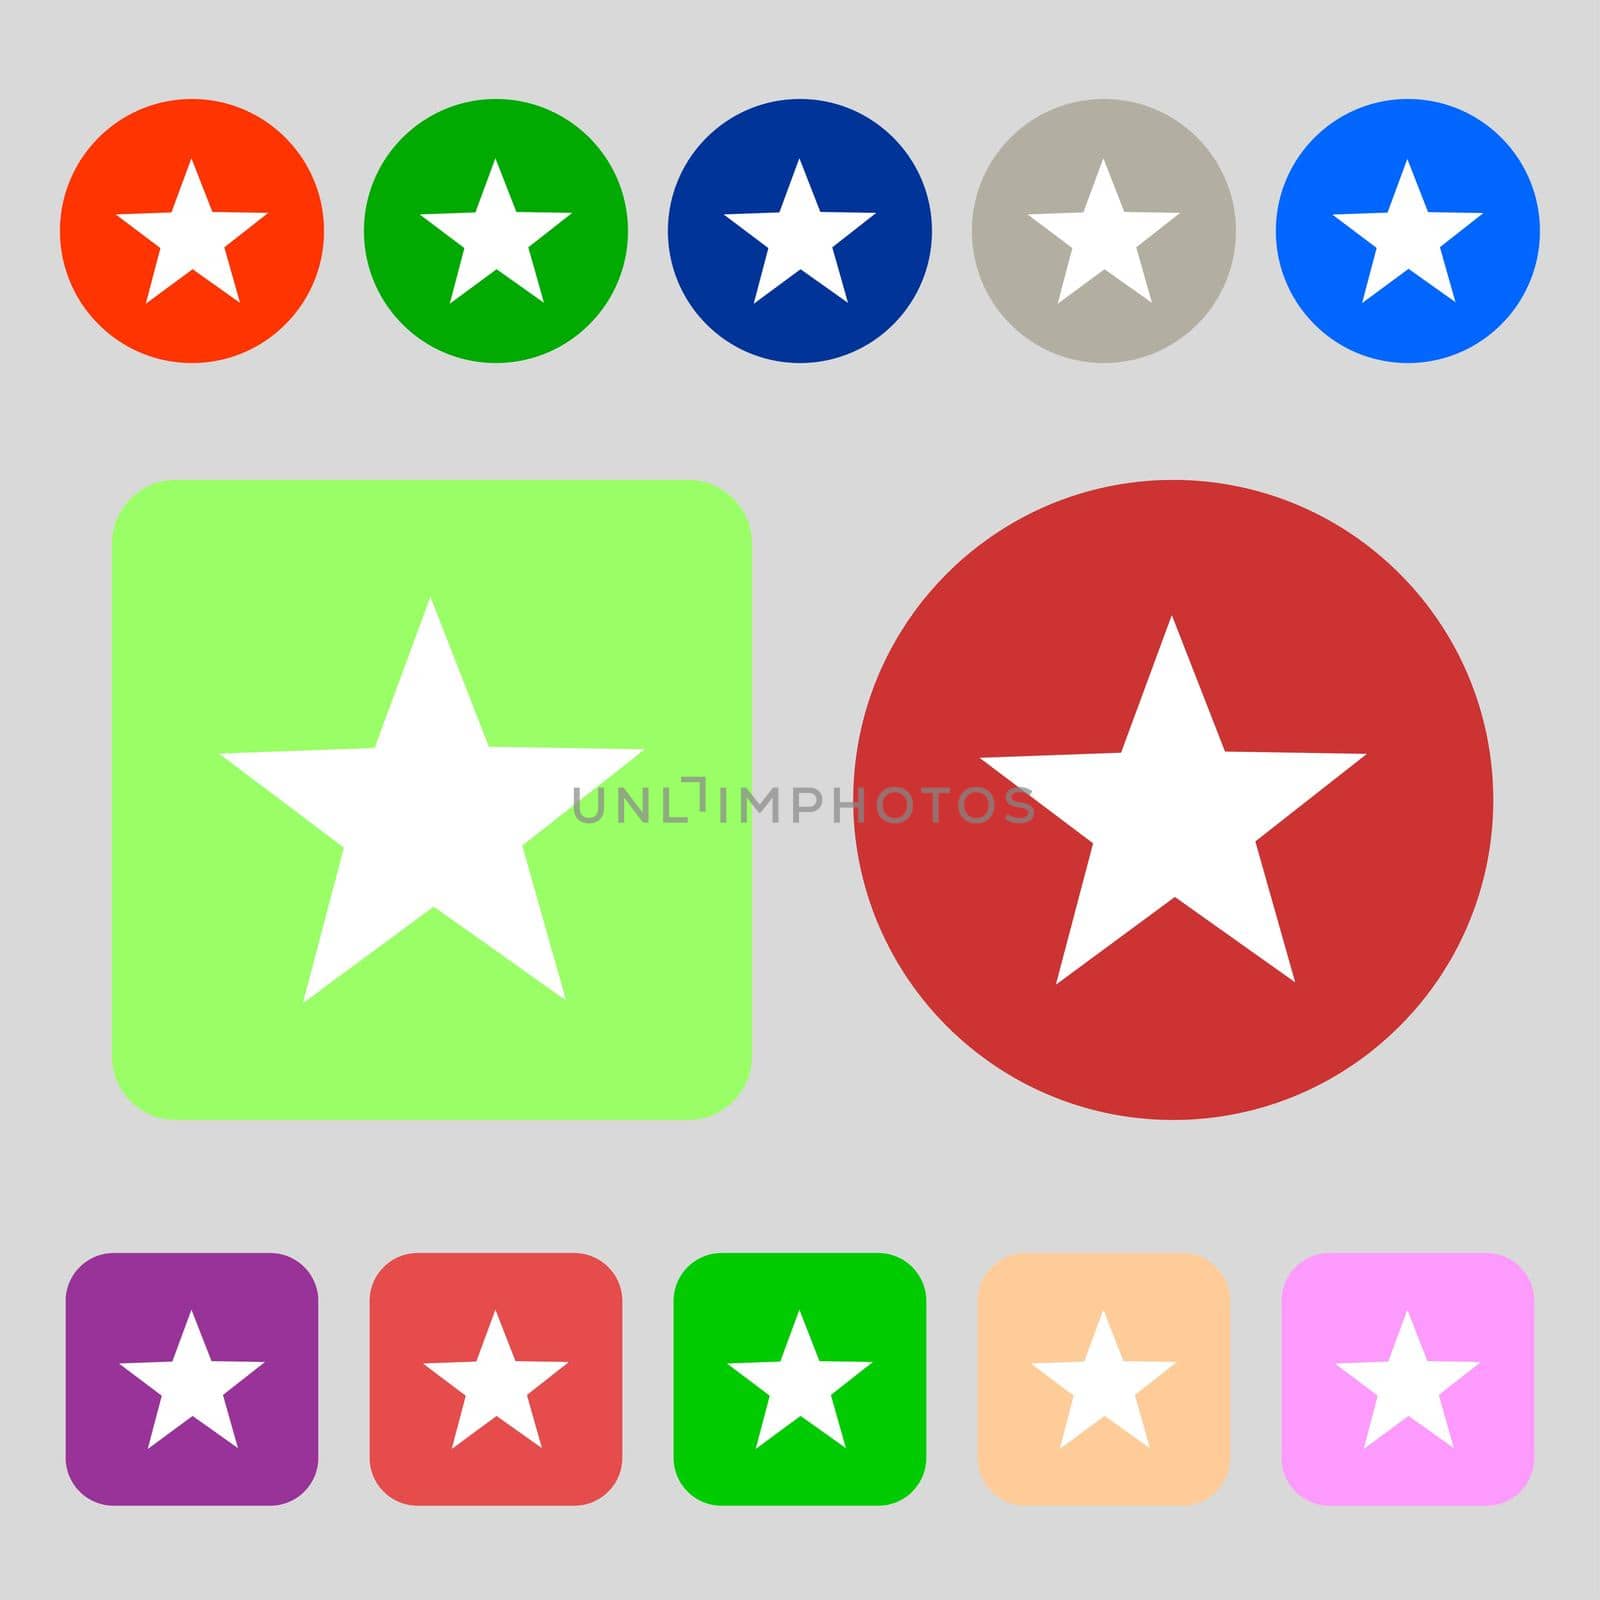 Star sign icon. Favorite button. Navigation symbol.12 colored buttons. Flat design. illustration